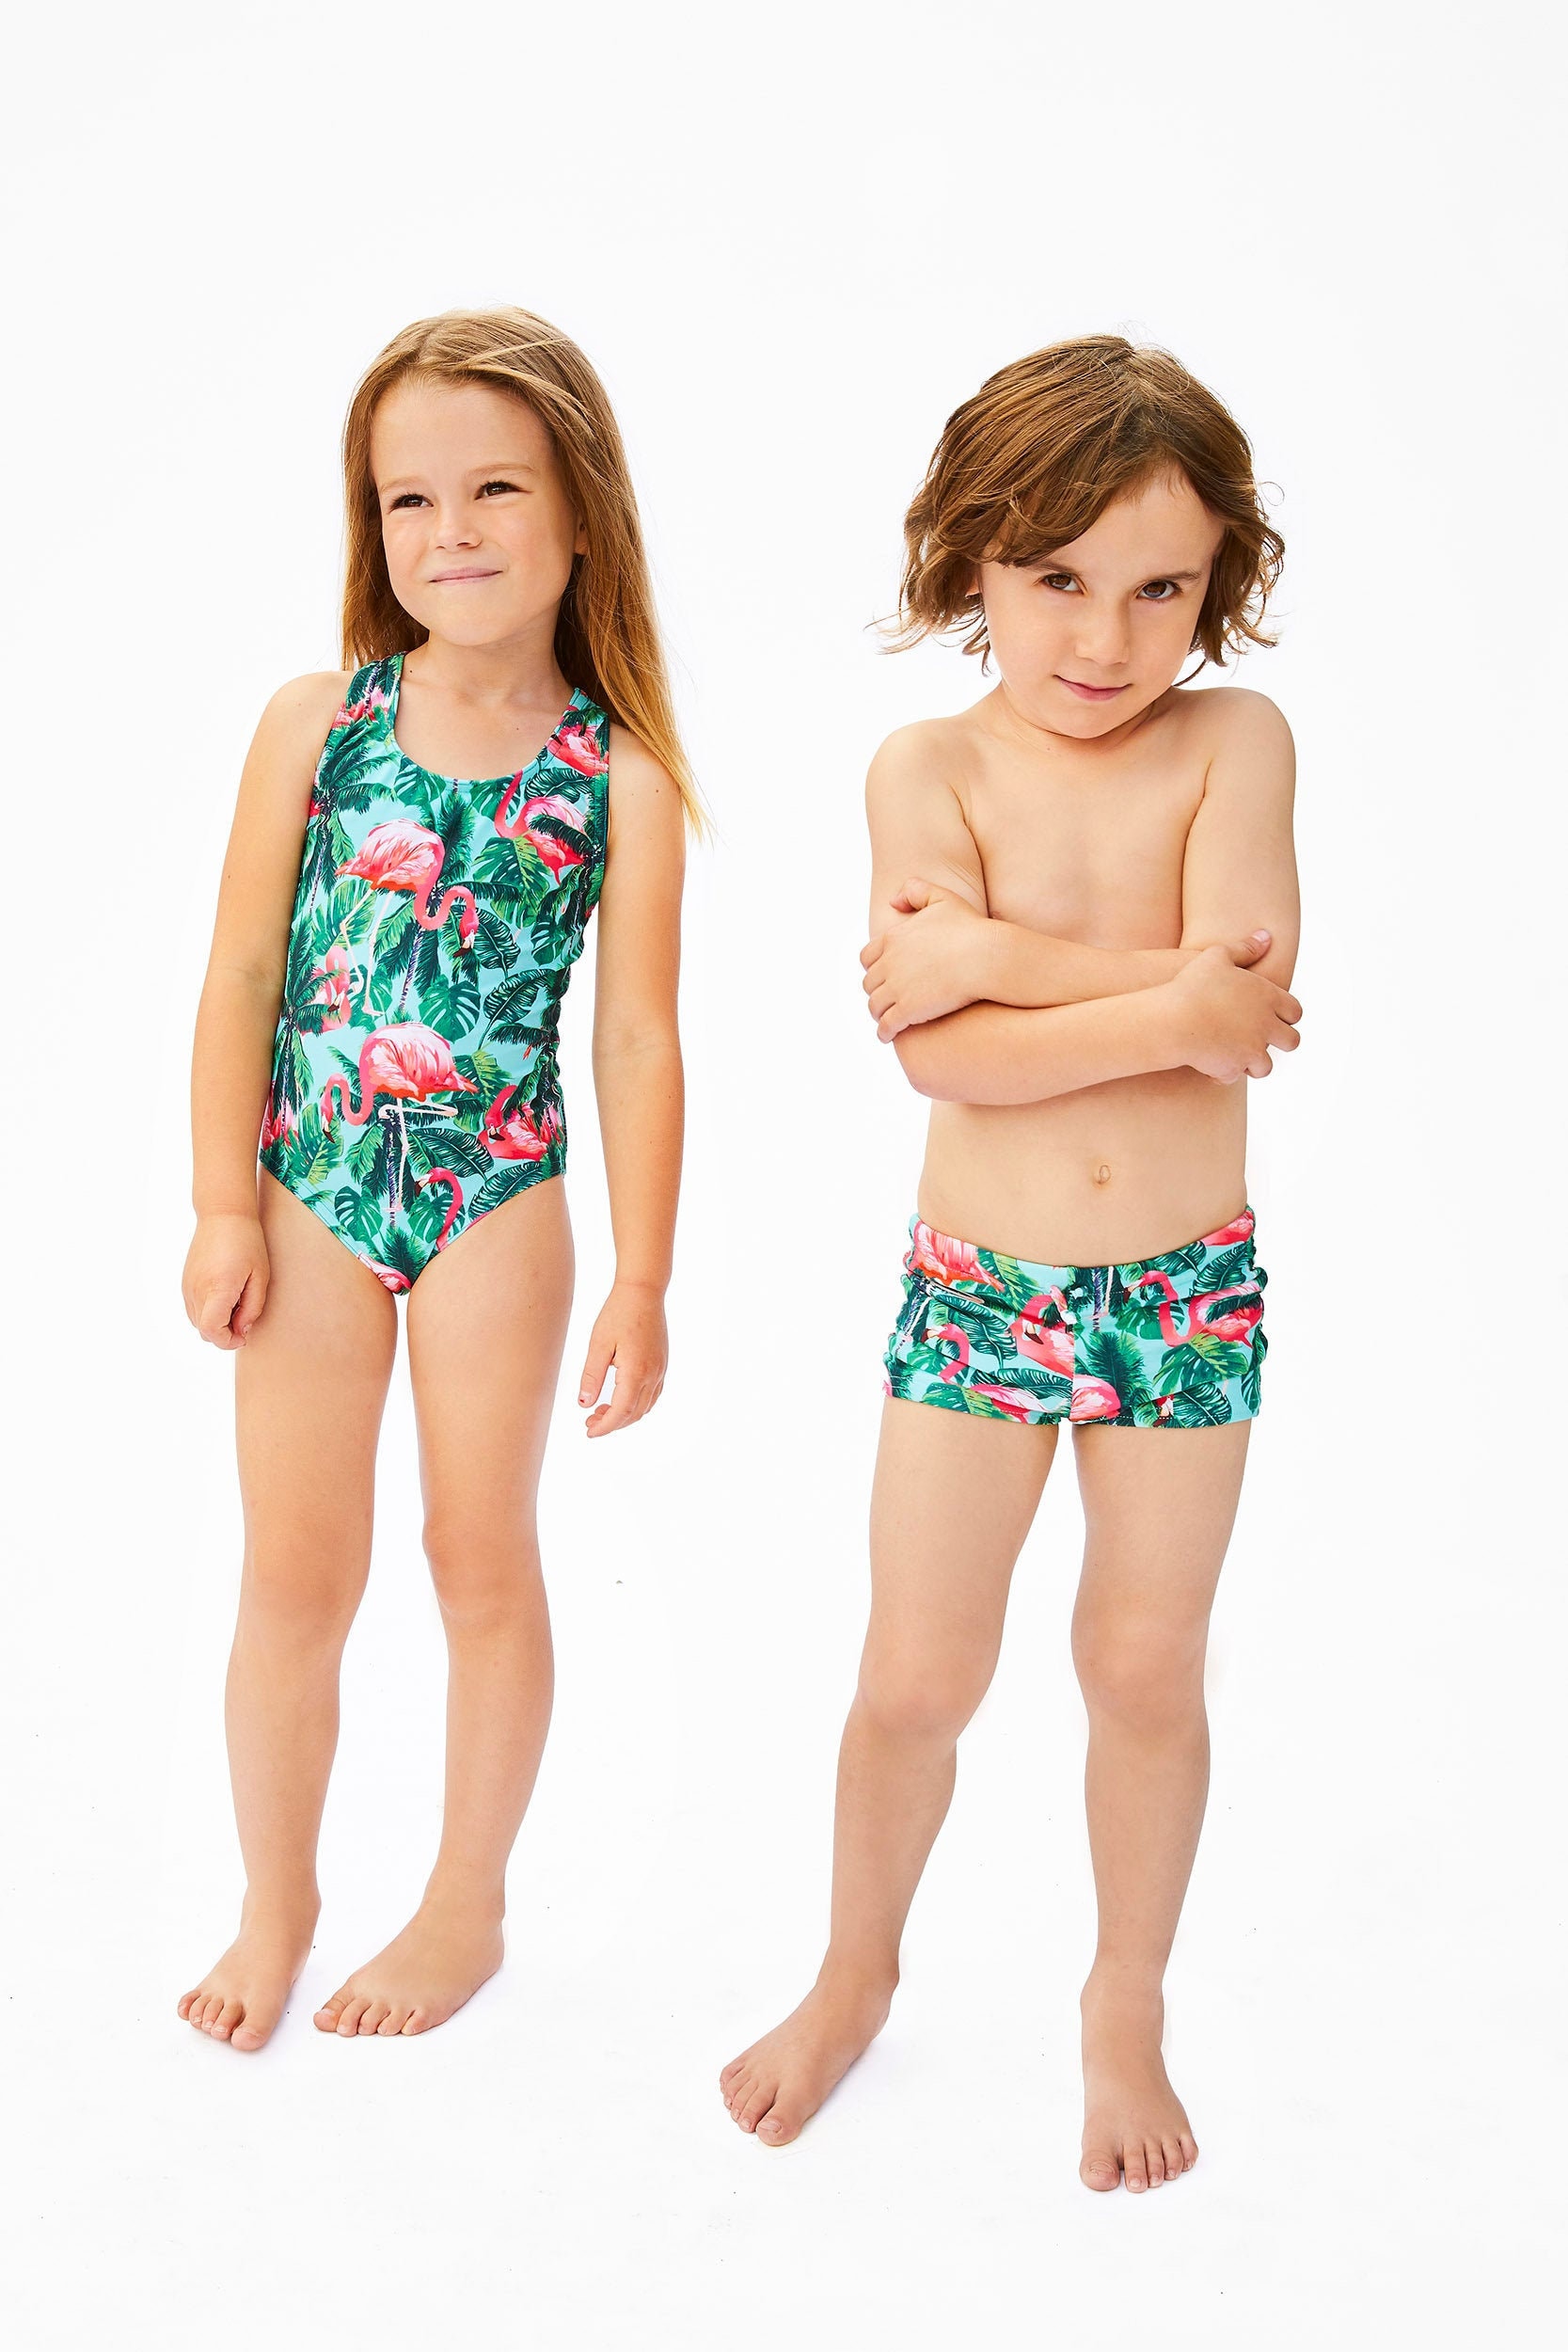 Boy's 8-18 Beach Mint Flamingo Print Swim Trunks Board Shorts Surf Bathing Suit